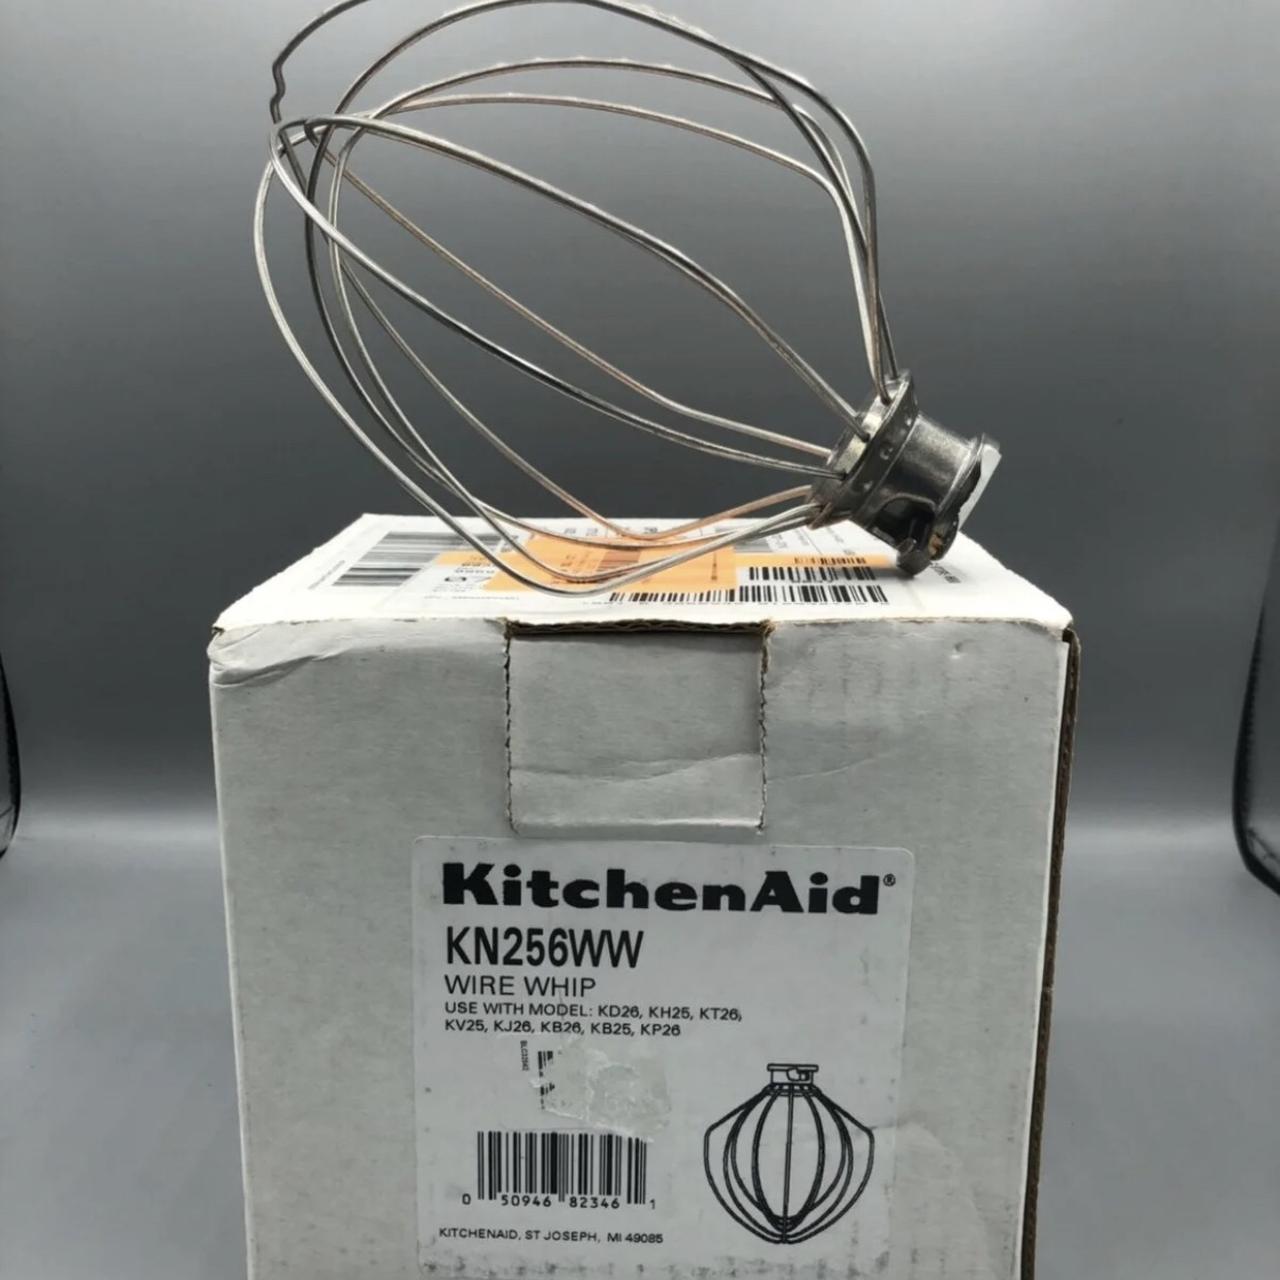 KitchenAid Kn256ww Wire Whip